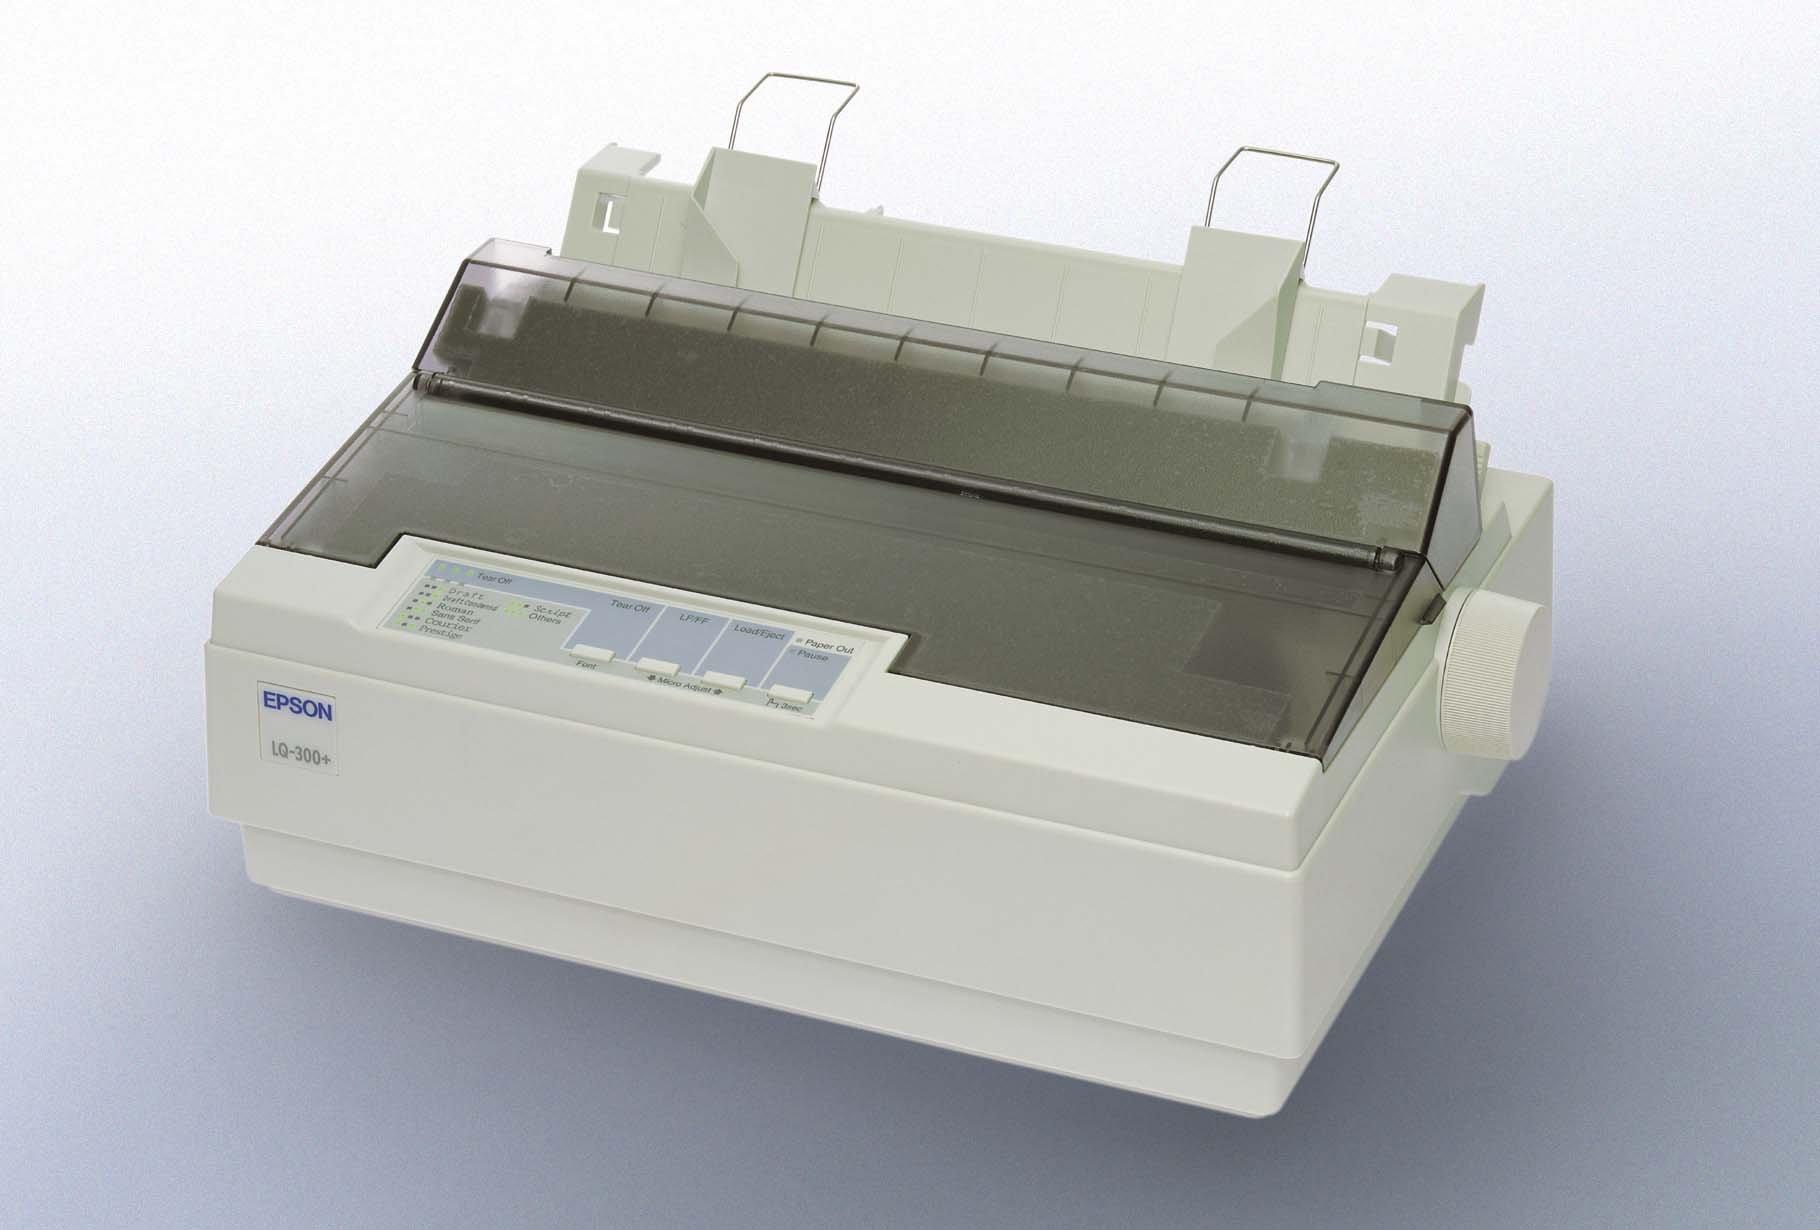 Матричный принтер epson lx. Epson LX-300+II. Принтер Epson LX-300+II матричный. Принтер Epson LX-300. Матричный принтер Эпсон LX 300.